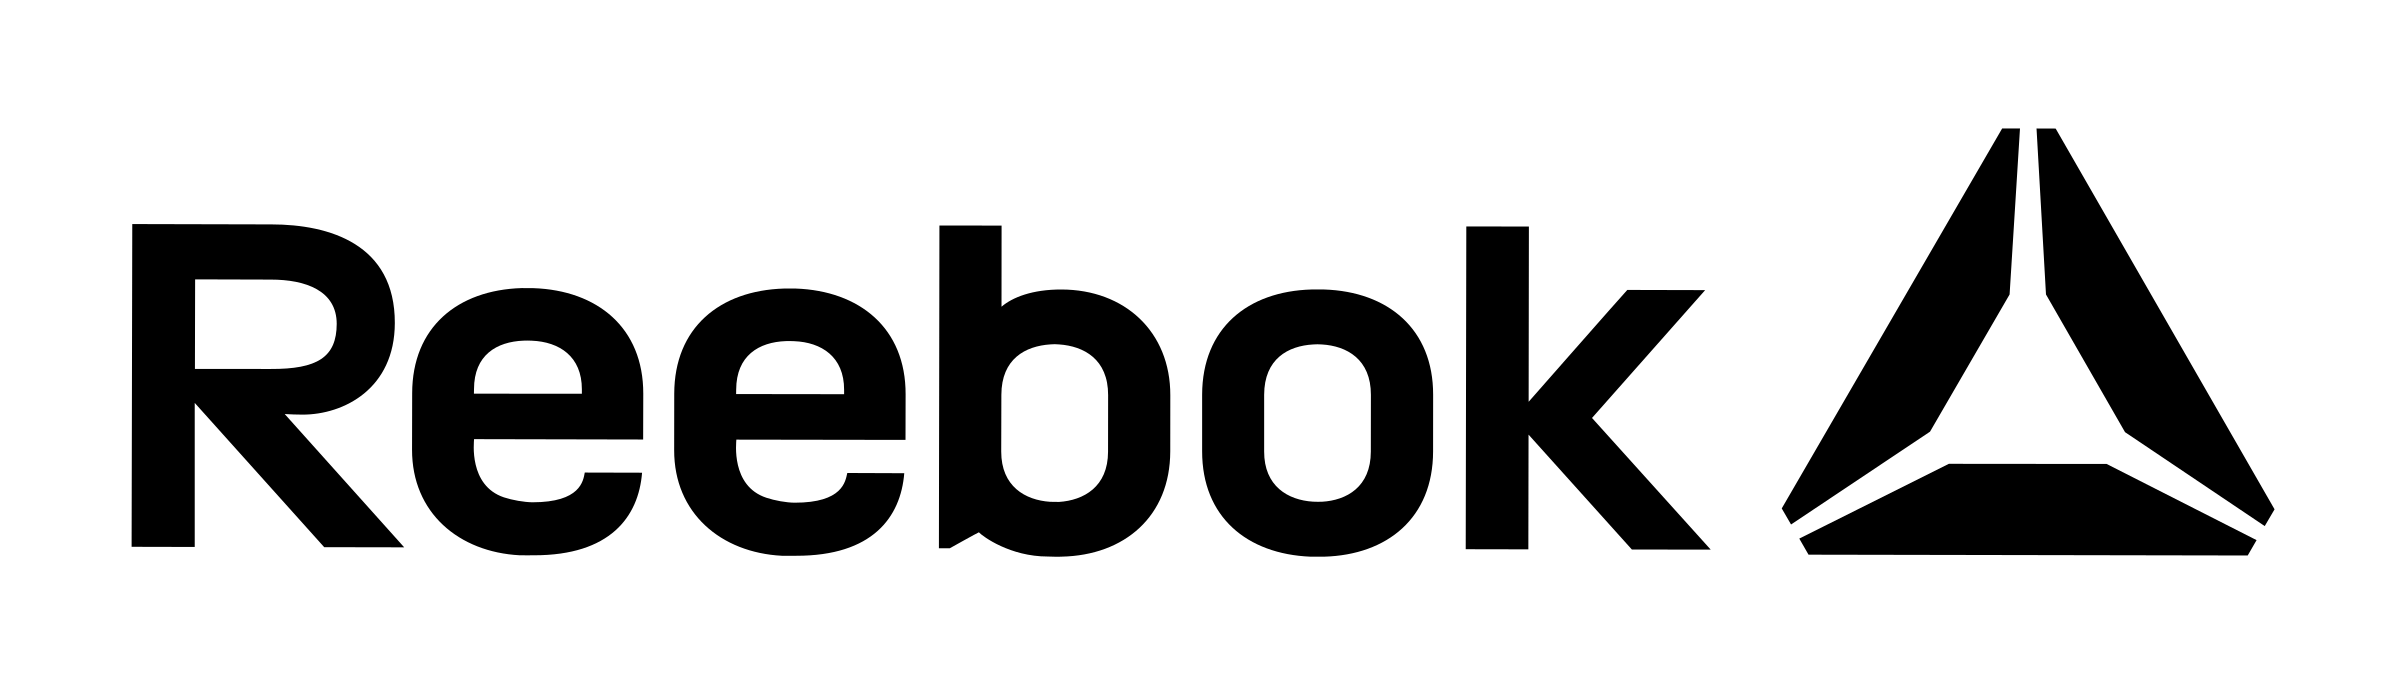 Black Reebok Logo - Reebok Logo PNG Transparent & SVG Vector